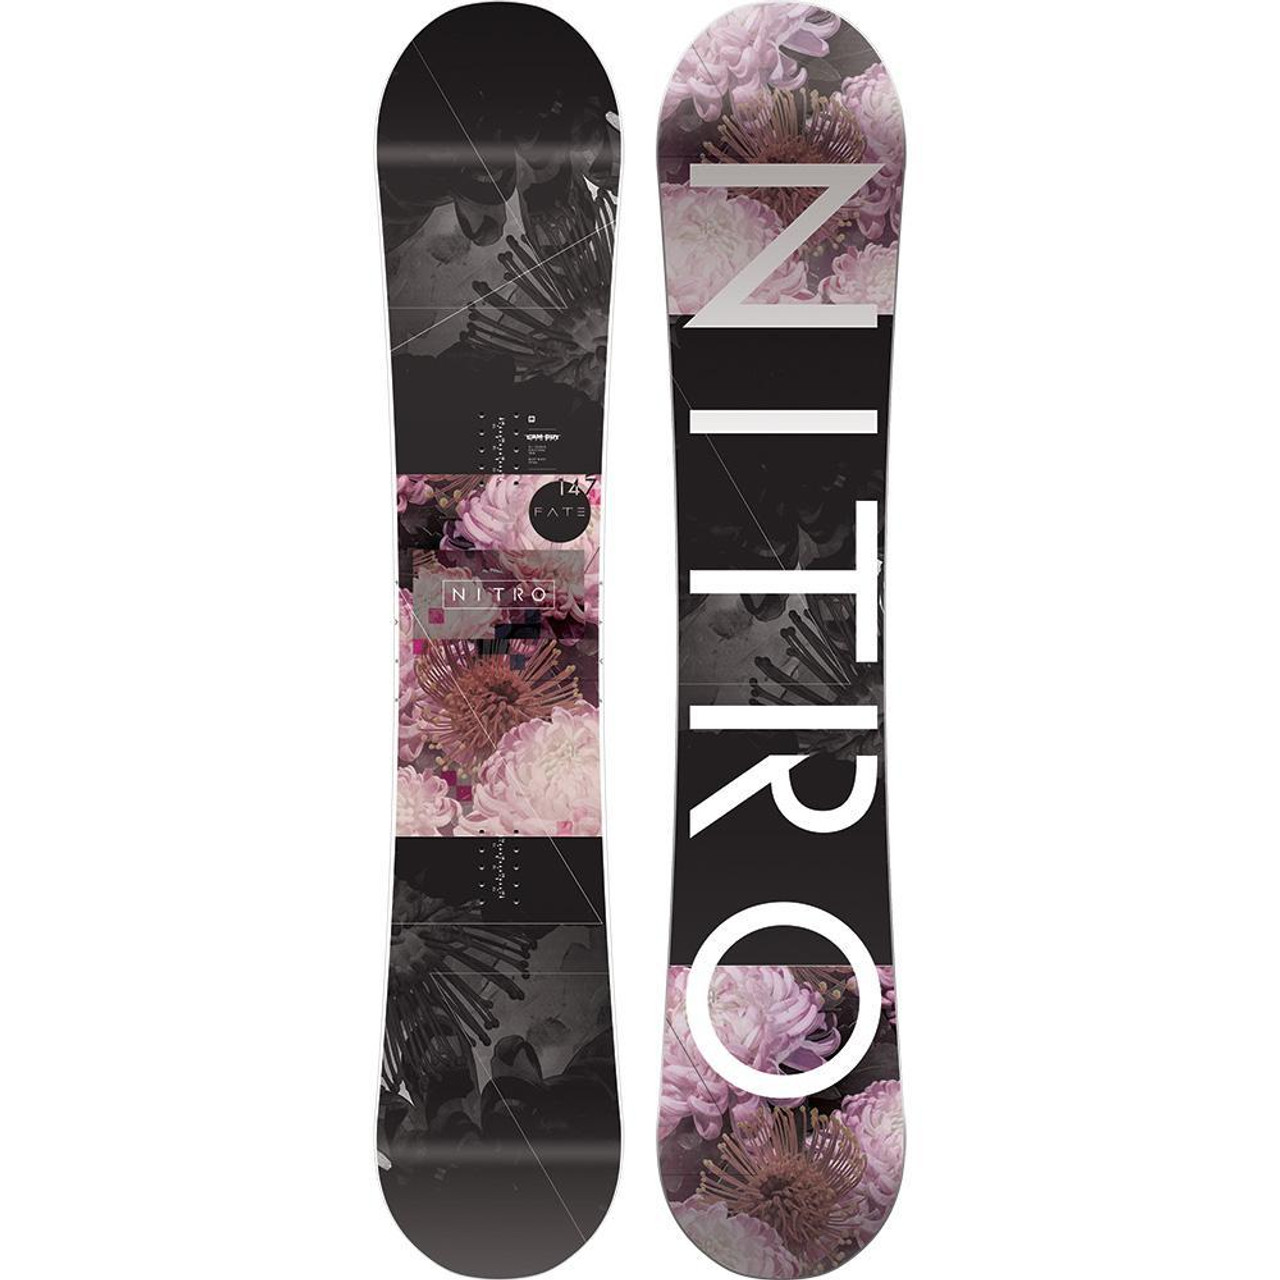 Aap Mijlpaal rand Nitro Fate Women's Snowboard | Nitro Snowboard 2019 | Get Boards